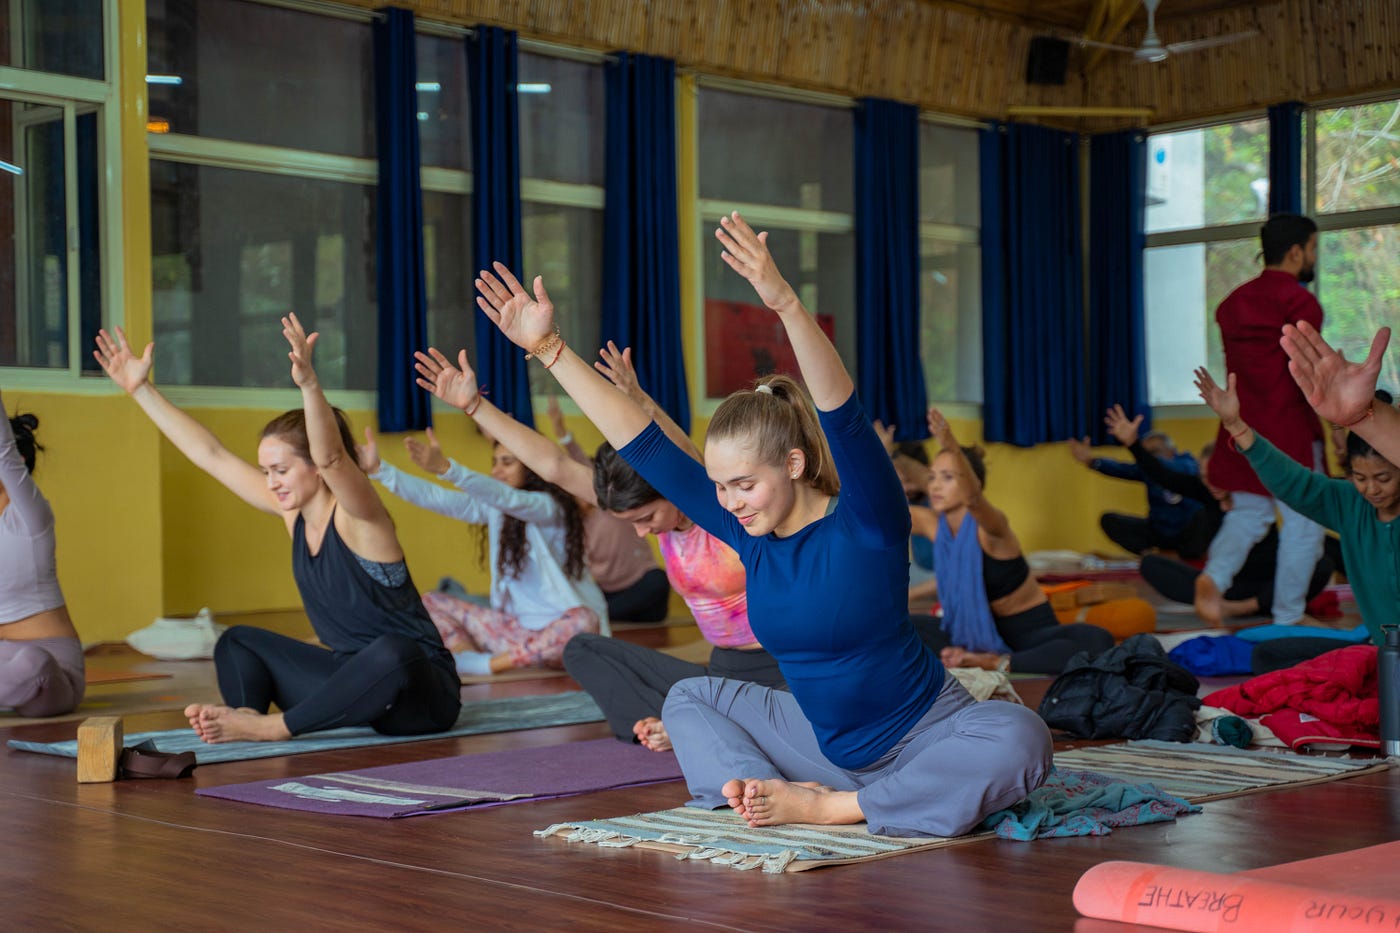 Kundalini Yoga 101: What to Wear to Kundalini Yoga Sessions